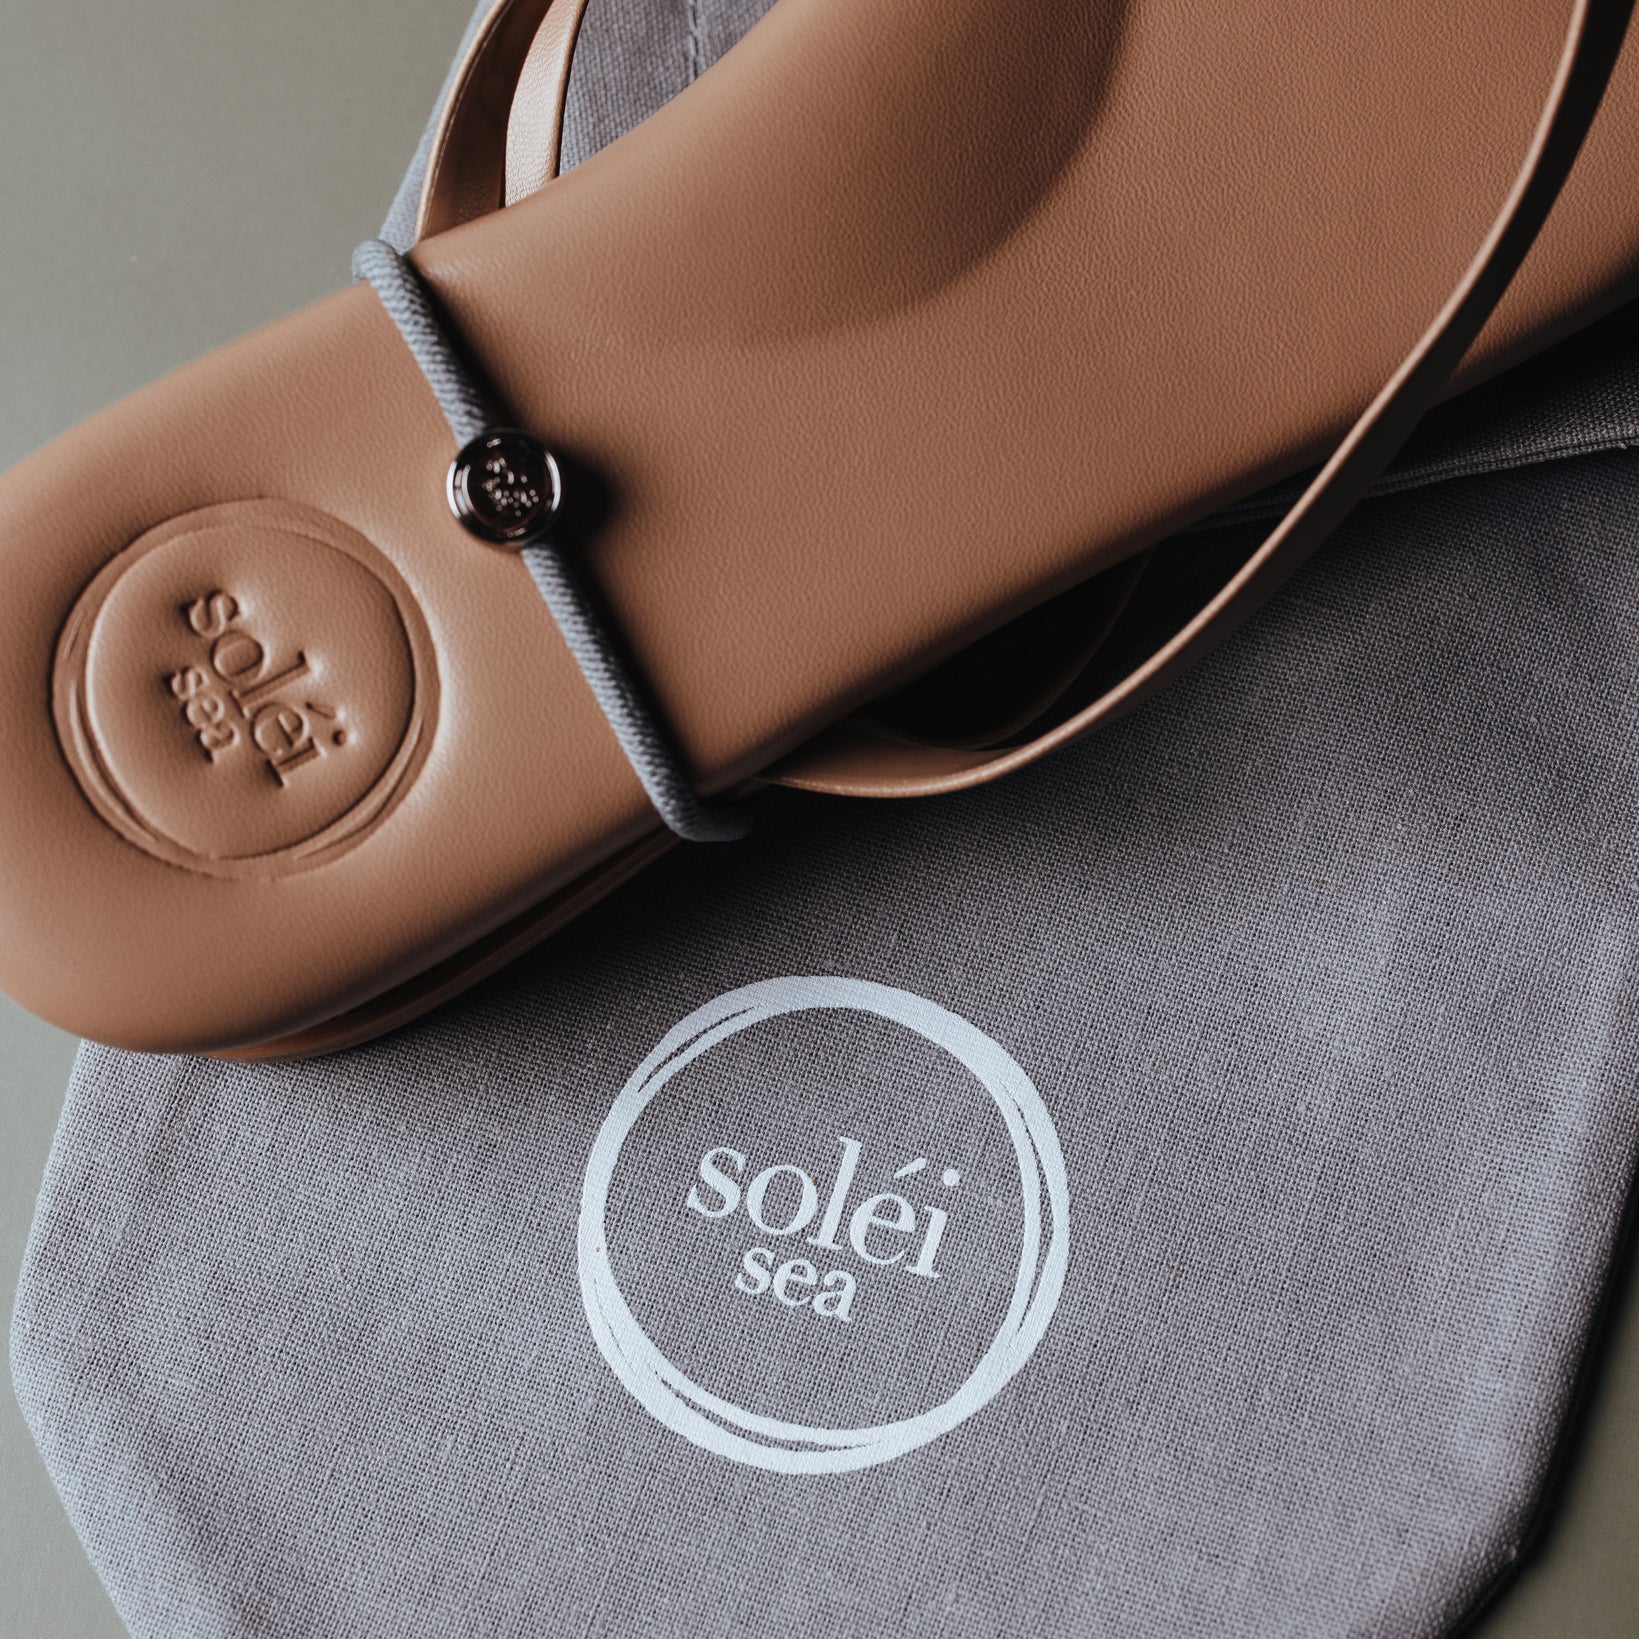 Indie Soft Silver Sandal